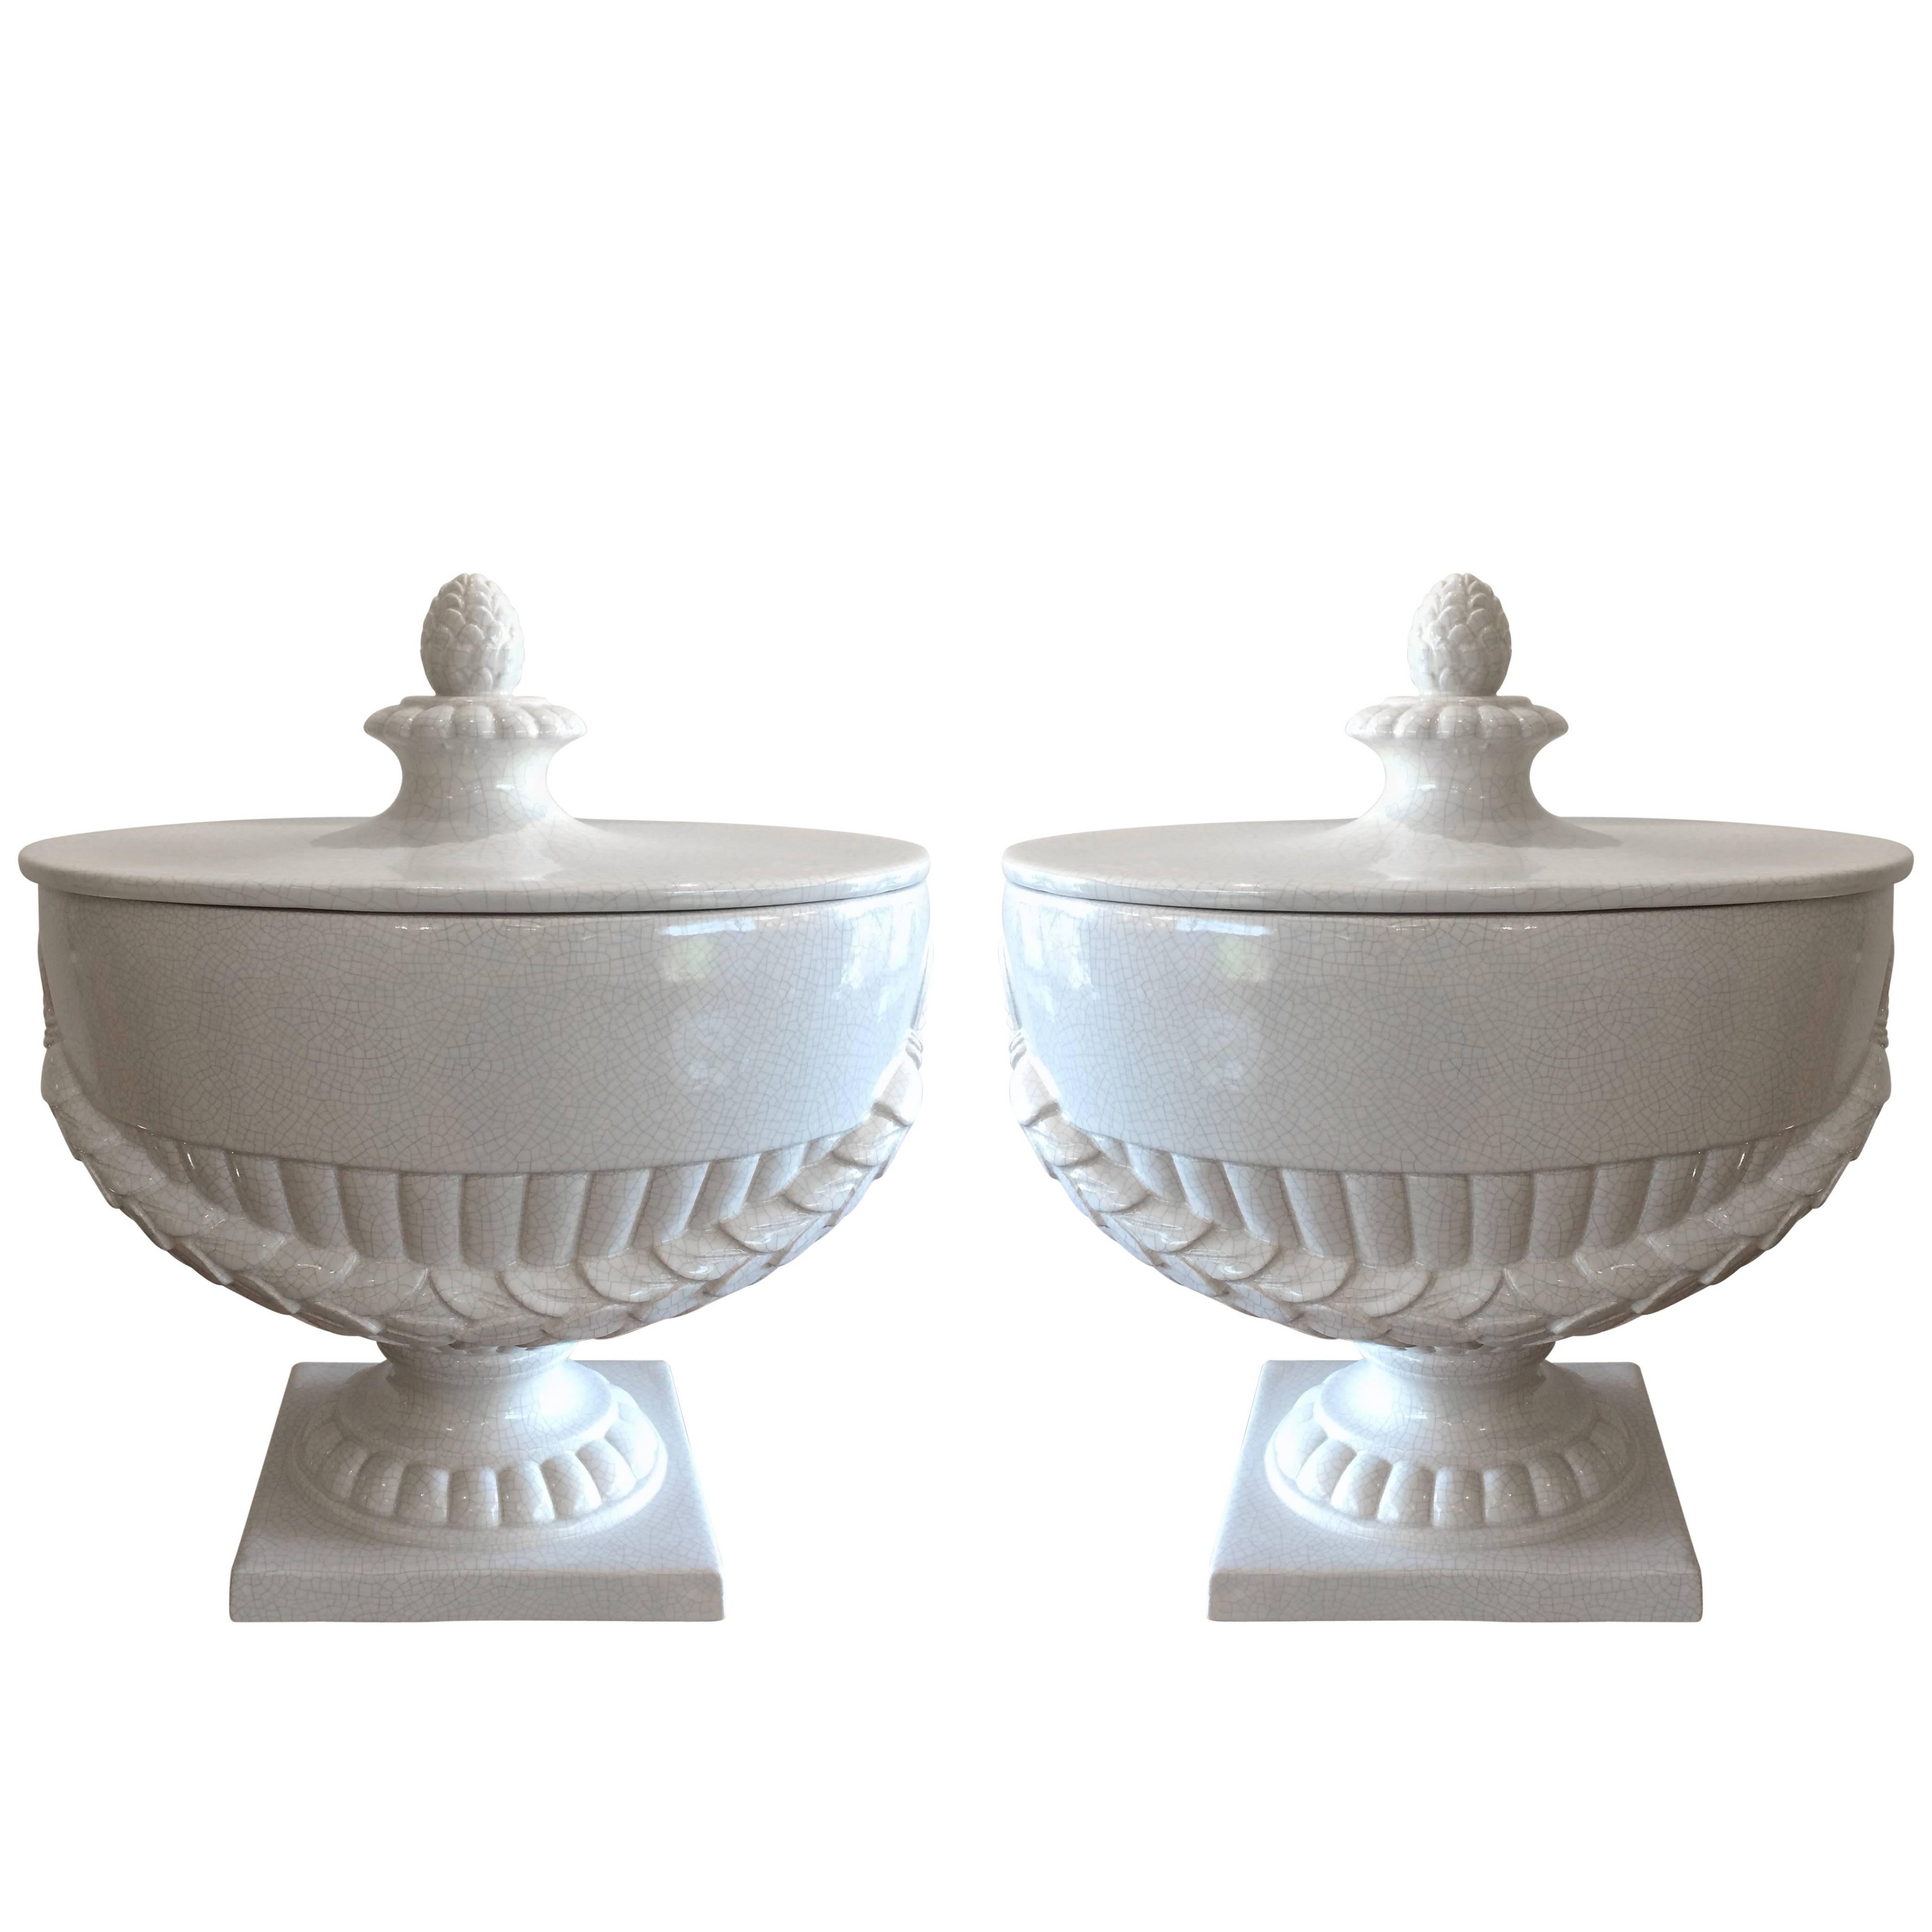 Elegant Pair of Large Neoclassical White Ceramic Lidded Urns